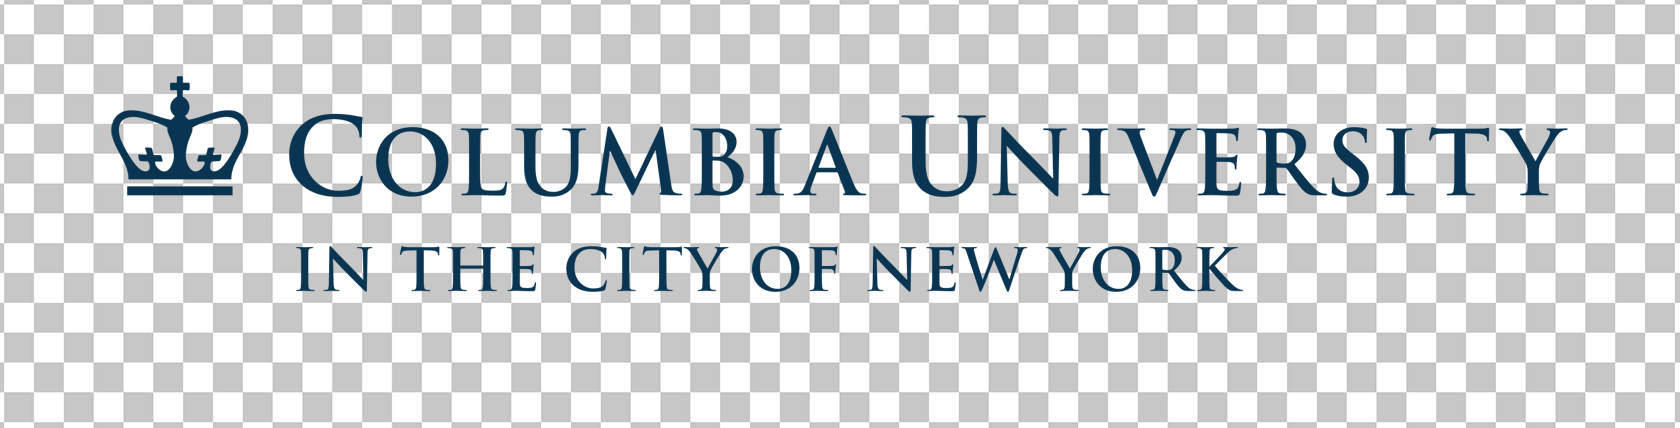 Columbia University Logo png image | OngPng